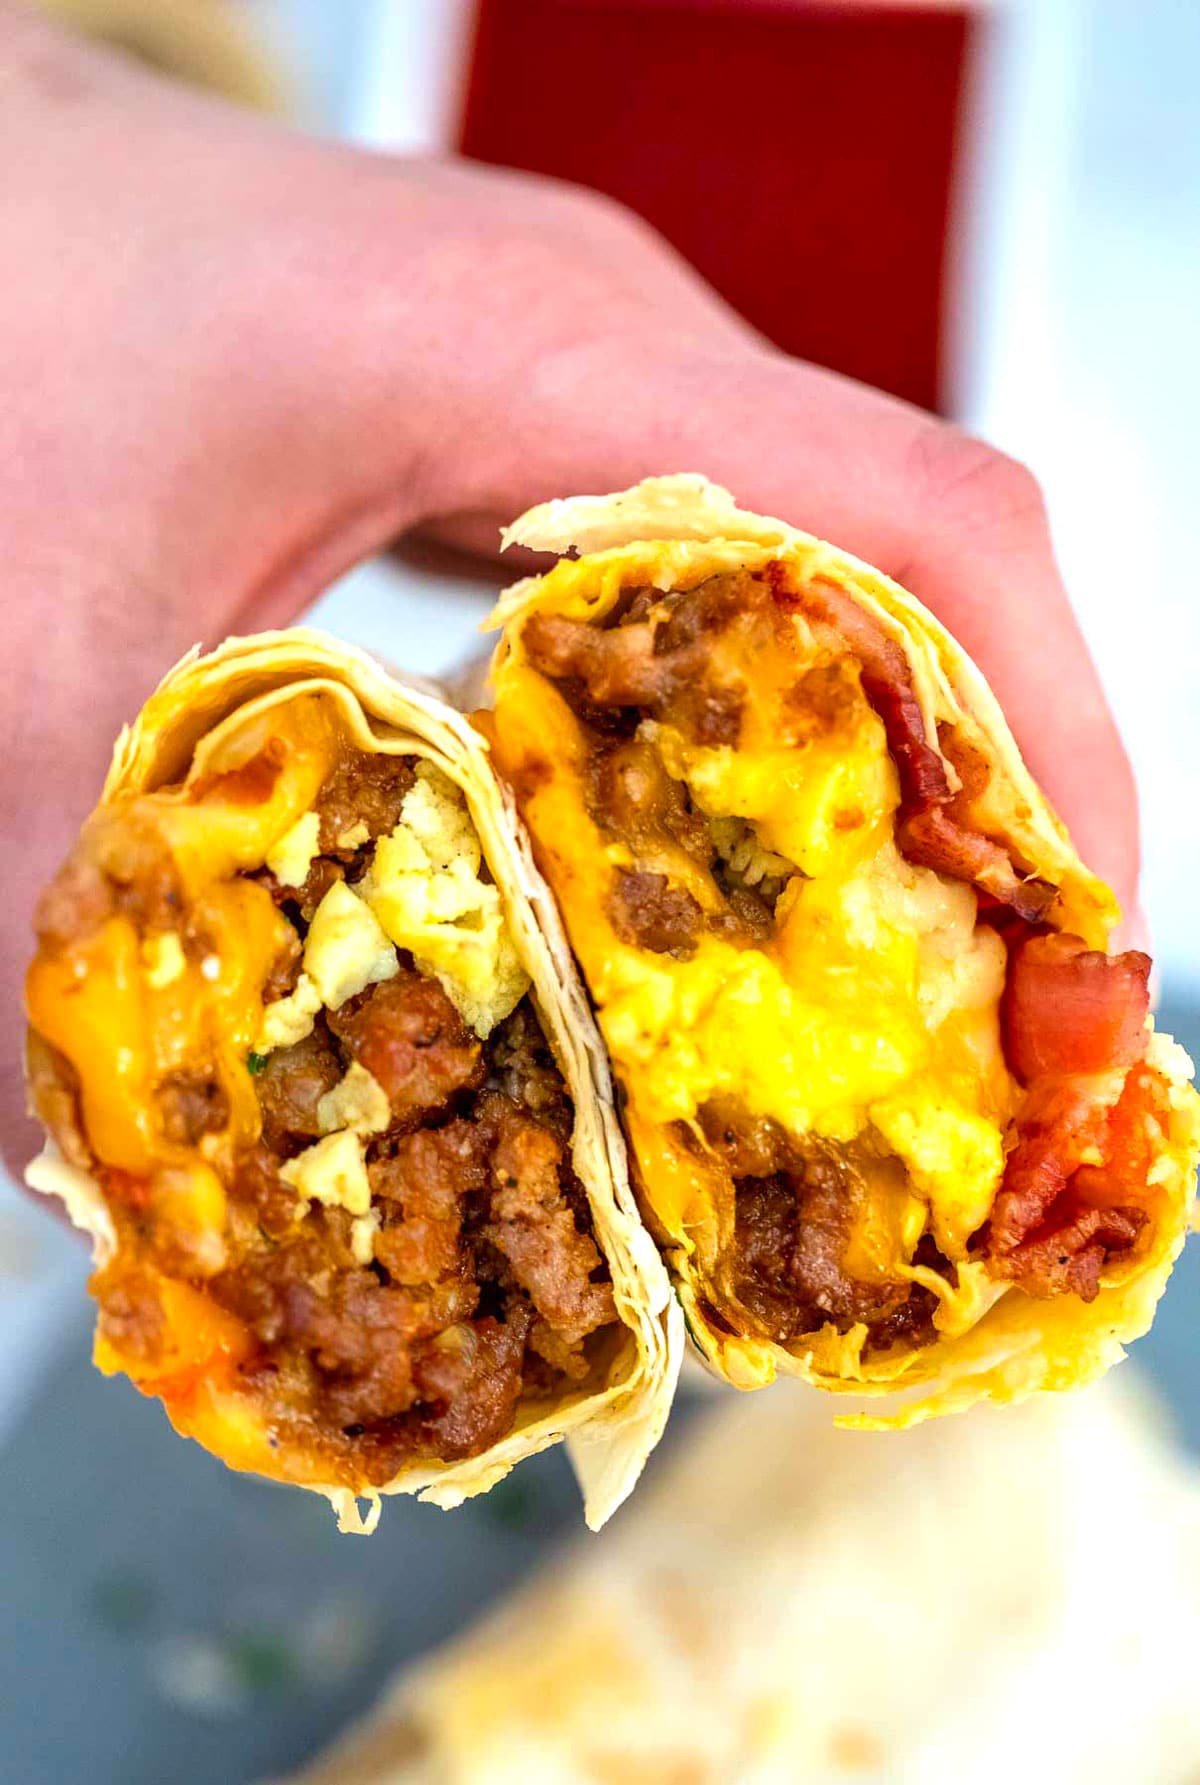 https://sweetandsavorymeals.com/wp-content/uploads/2020/03/sausage-egg-and-cheese-breakfast-burrito-recipe.jpg